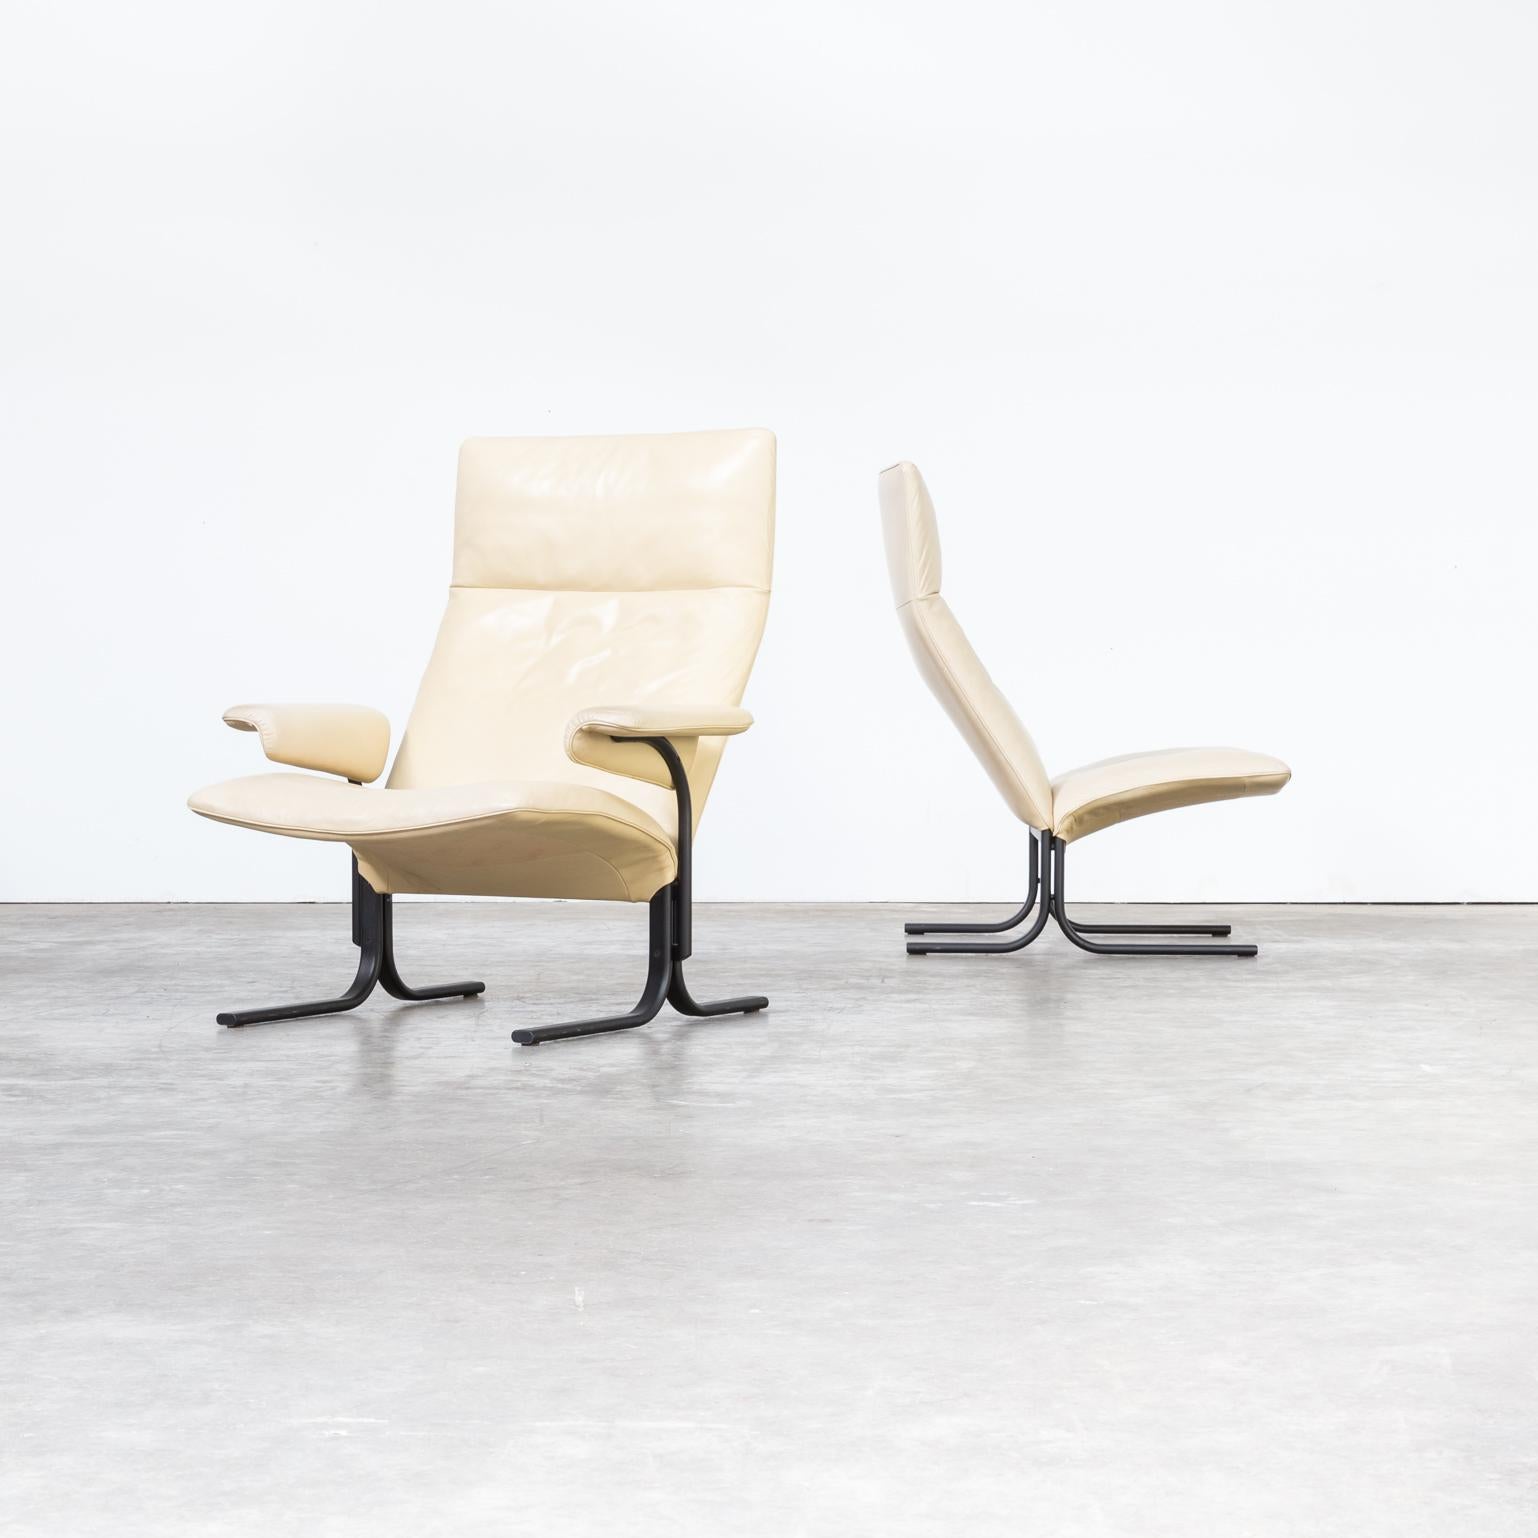 1970s Hans Eichenberger ‘DS 2030’ lounge fauteuils for De Sede. Good vintage condition, wear consistent with age and use.